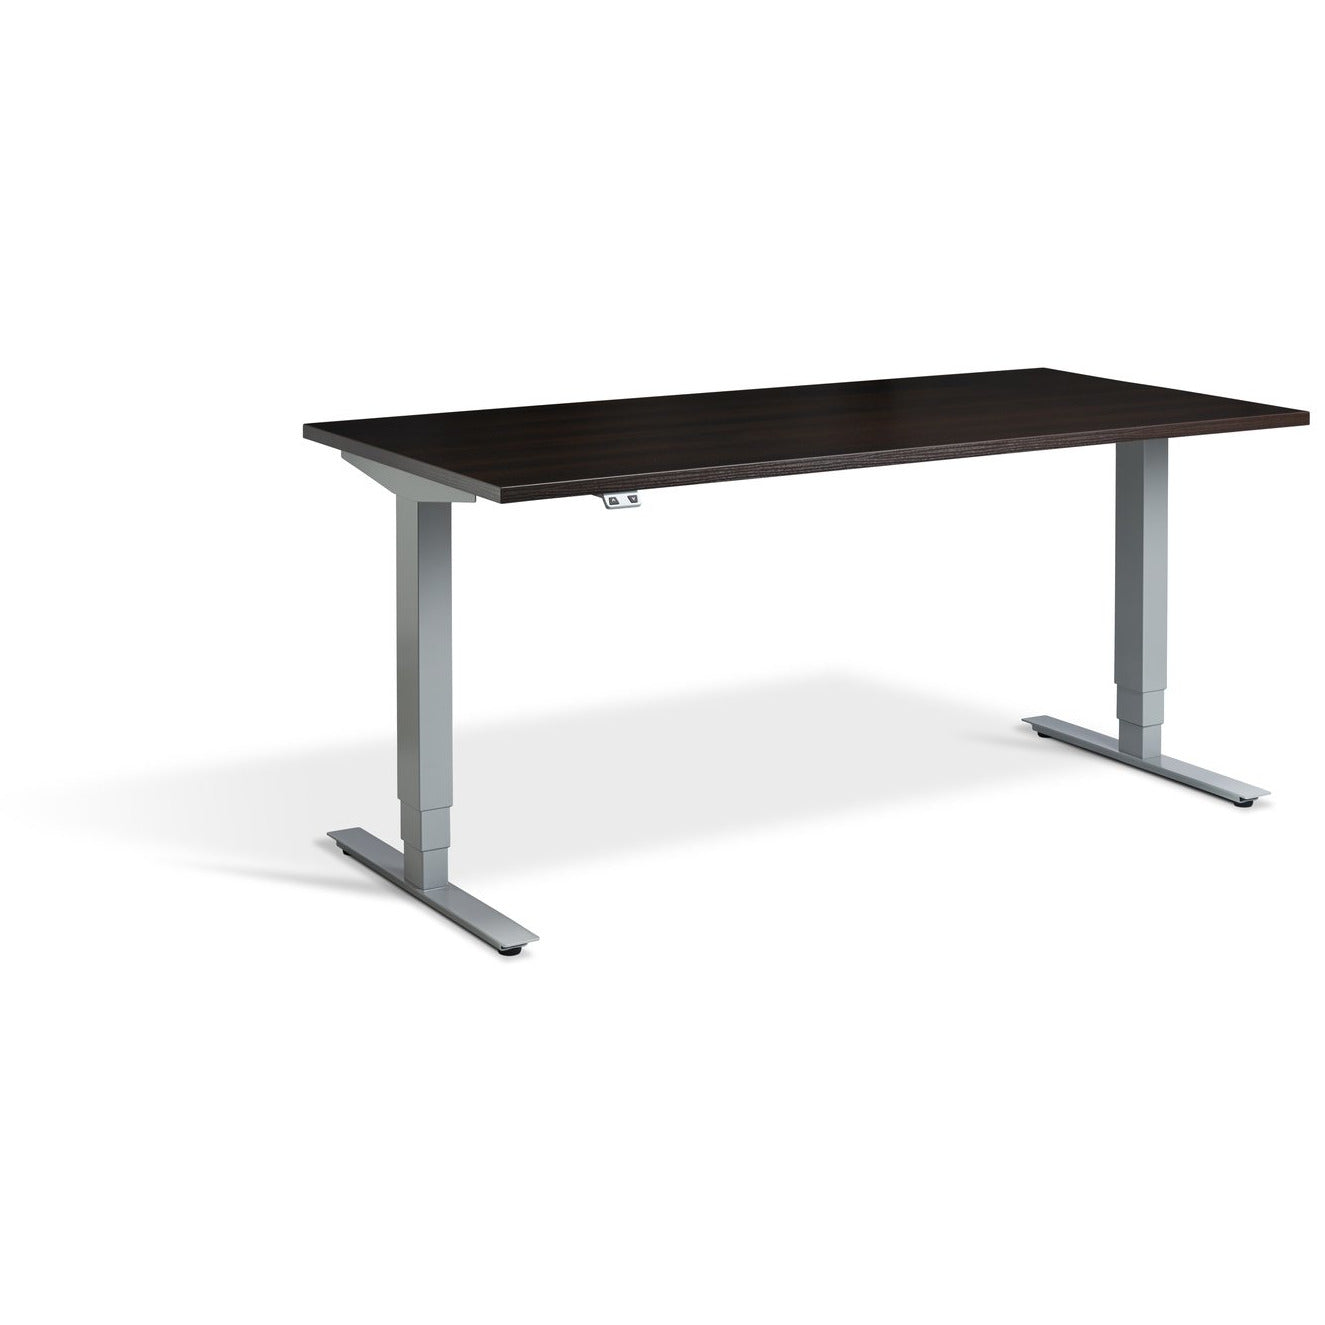 Advance 1400mm Wide - Height Adjustable Desk - UK Ergonomics